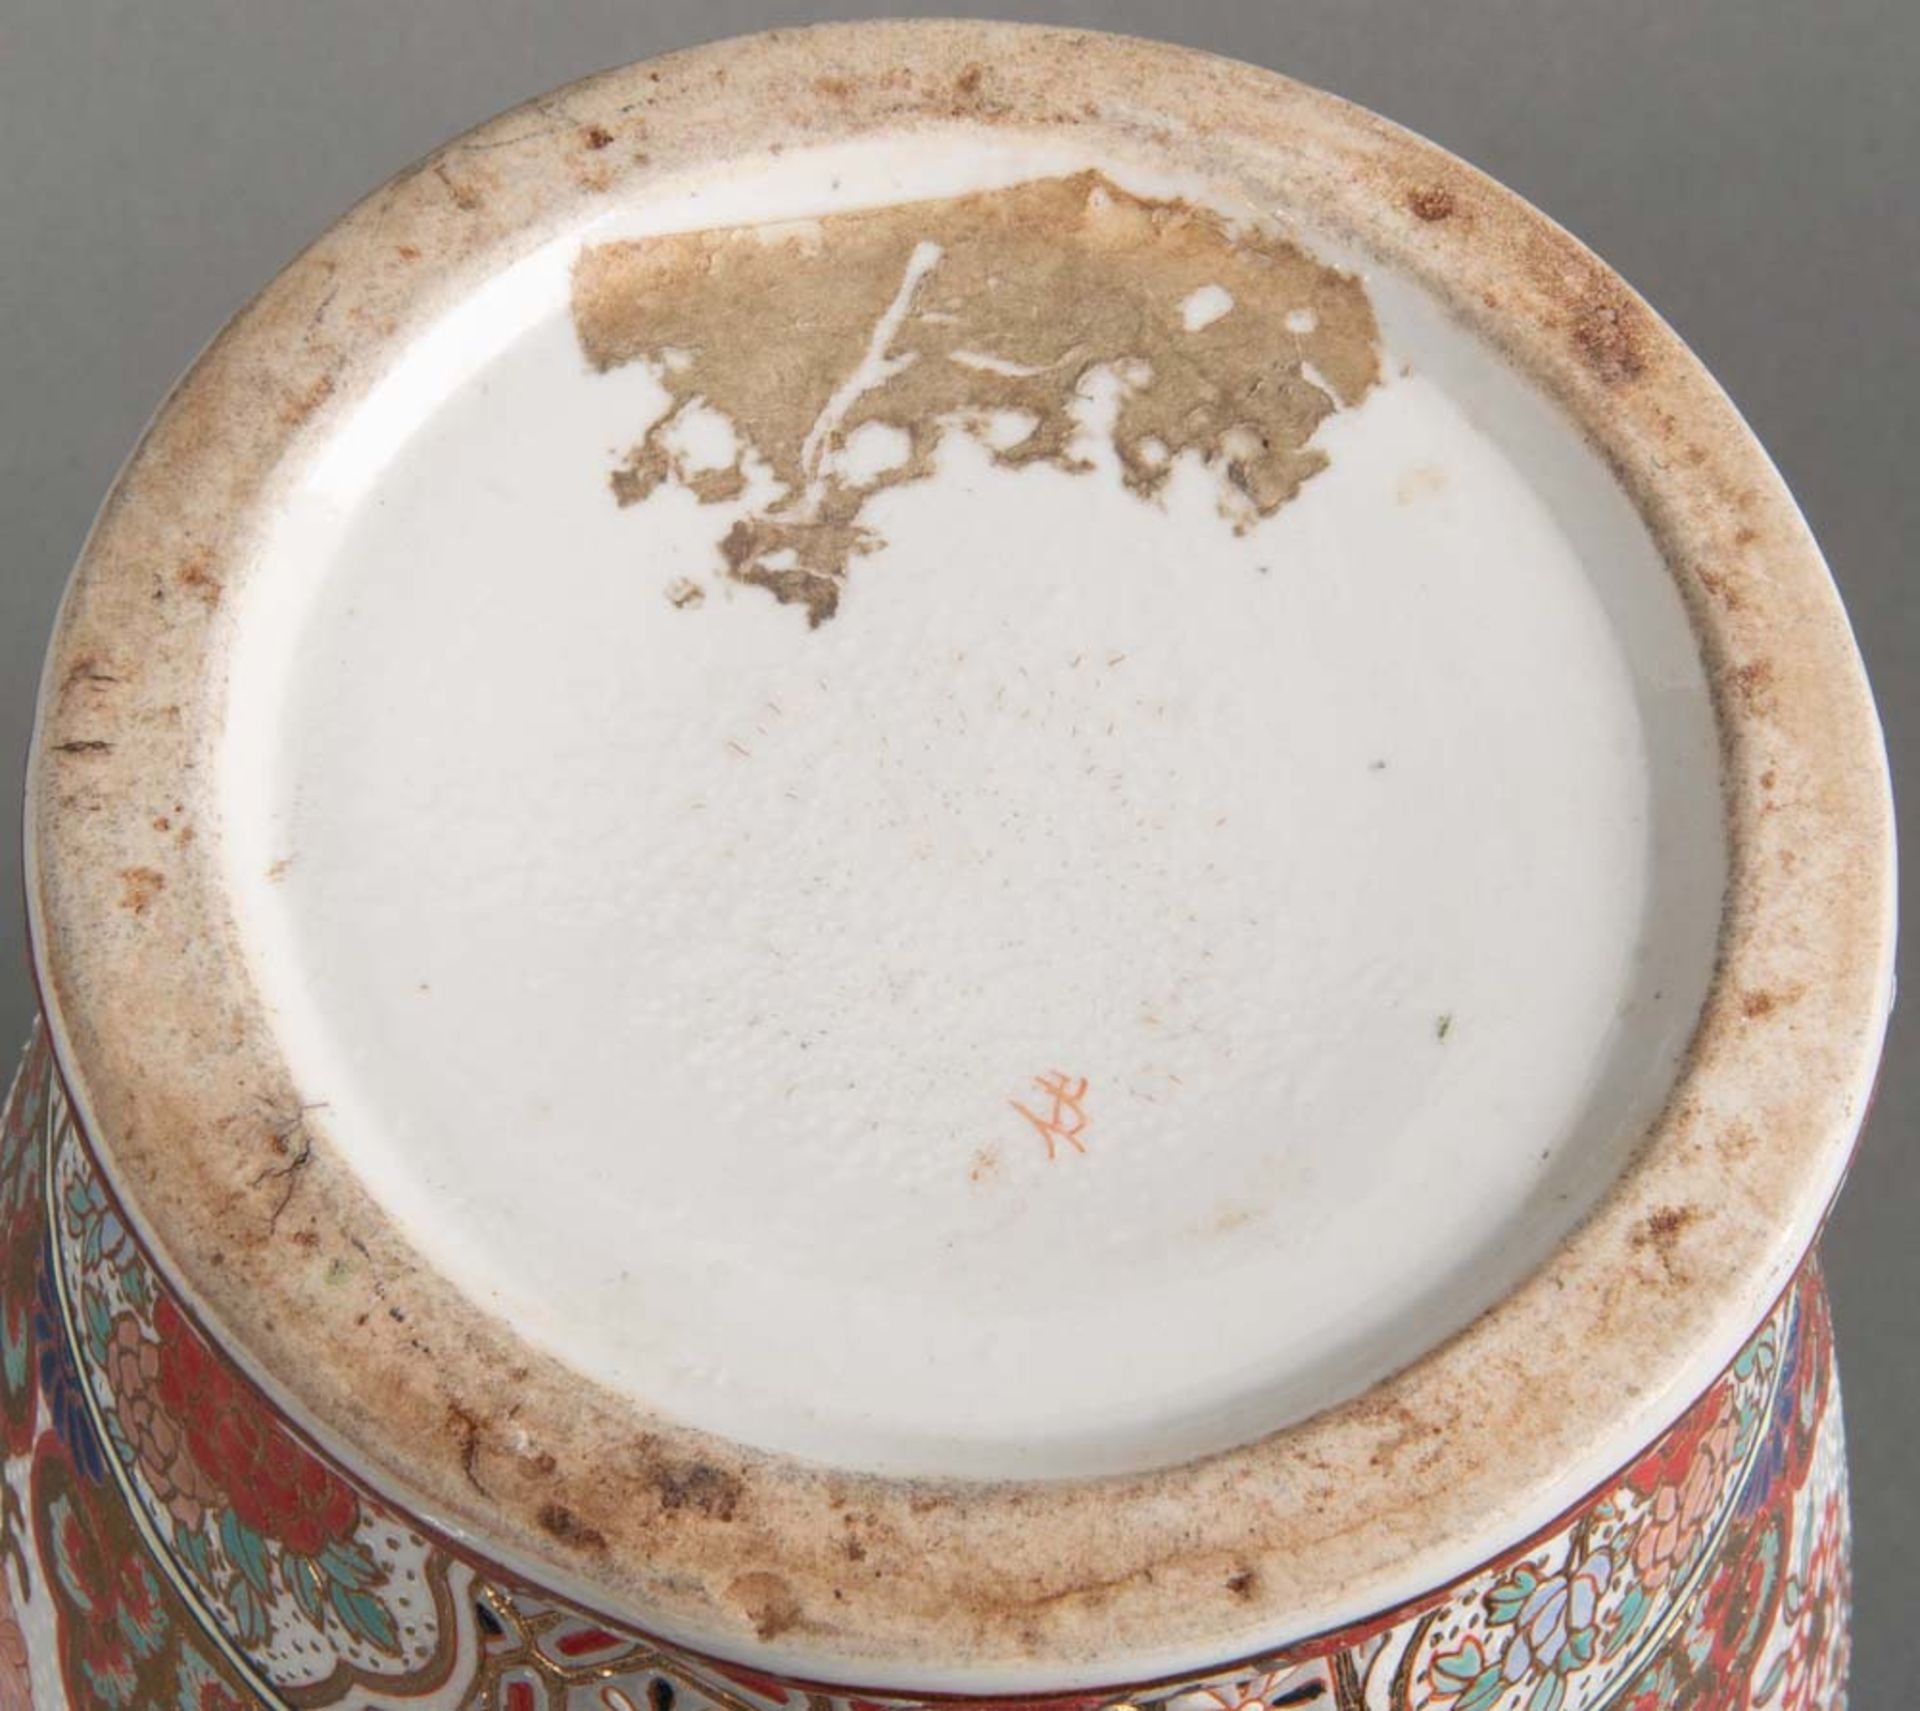 Vase. Asien. Porzellan, bunt bemalt mit Floral- und Golddekor, H=25 cm. - Image 2 of 2